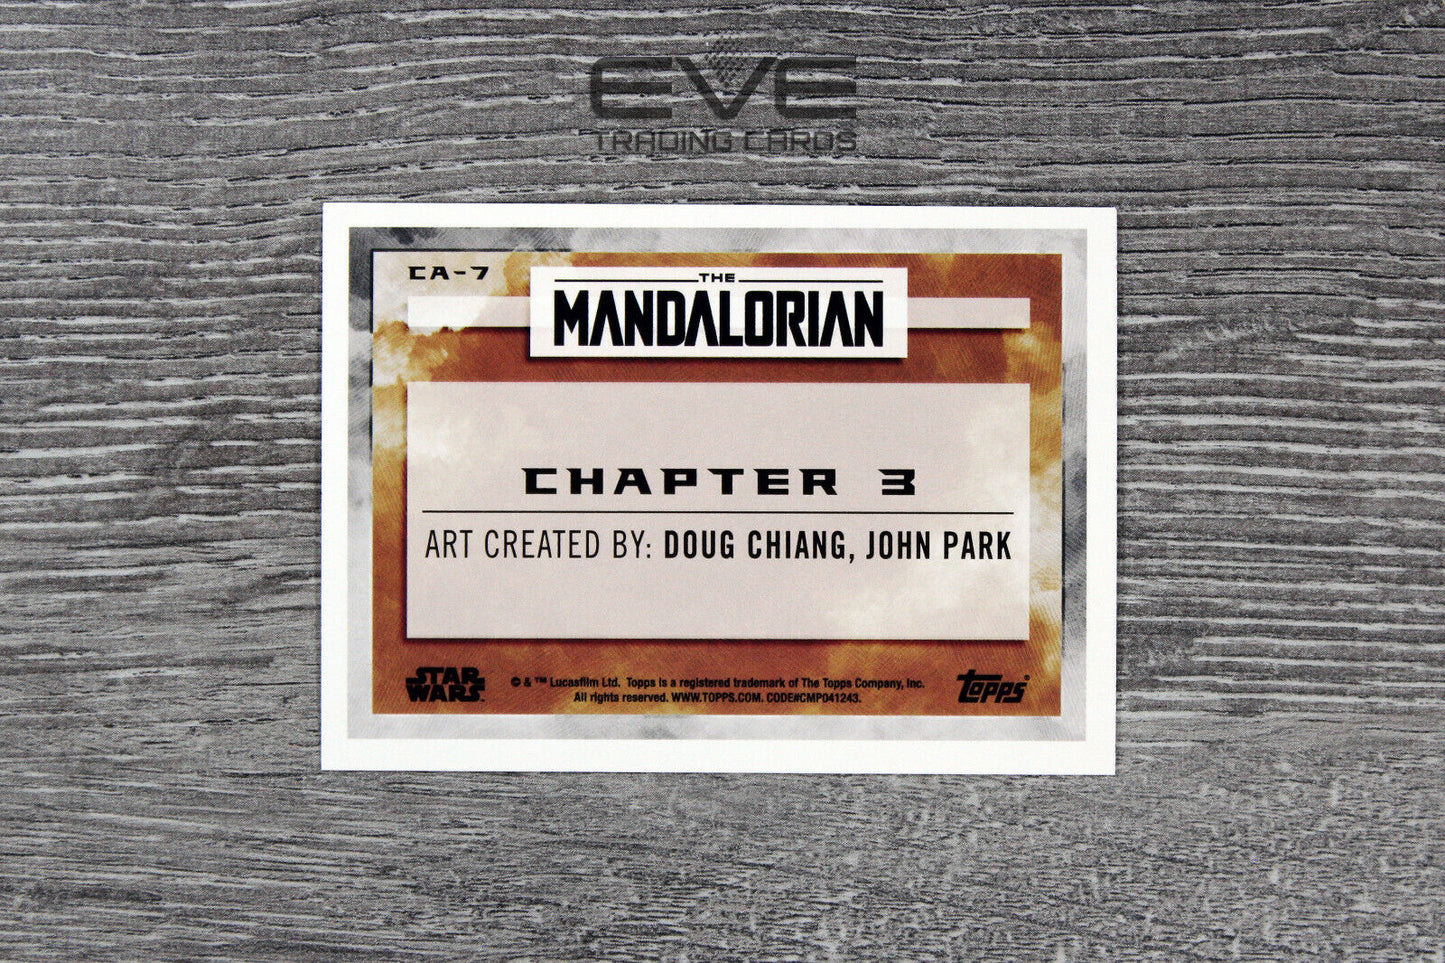 2020 Topps Star Wars The Mandalorian Card #CA-7 Concept Art "Chapter 3"